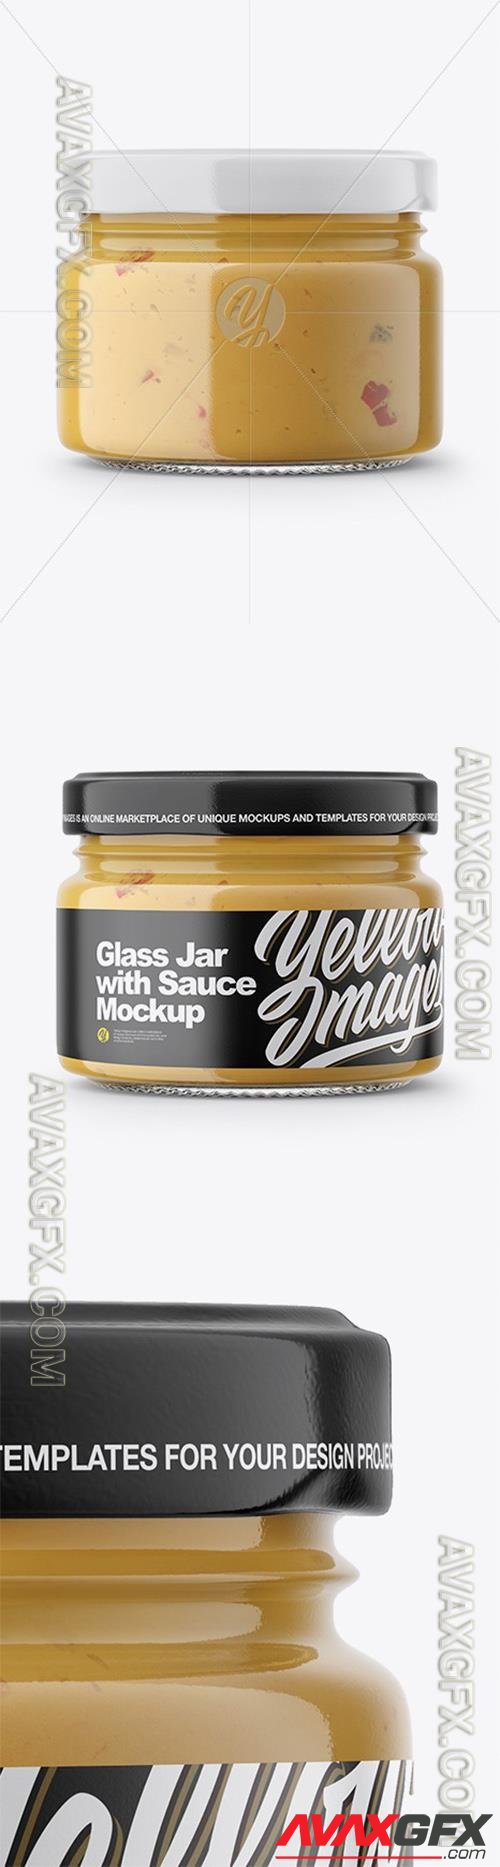 Glass Jar with Sauce Mockup 57710 TIF